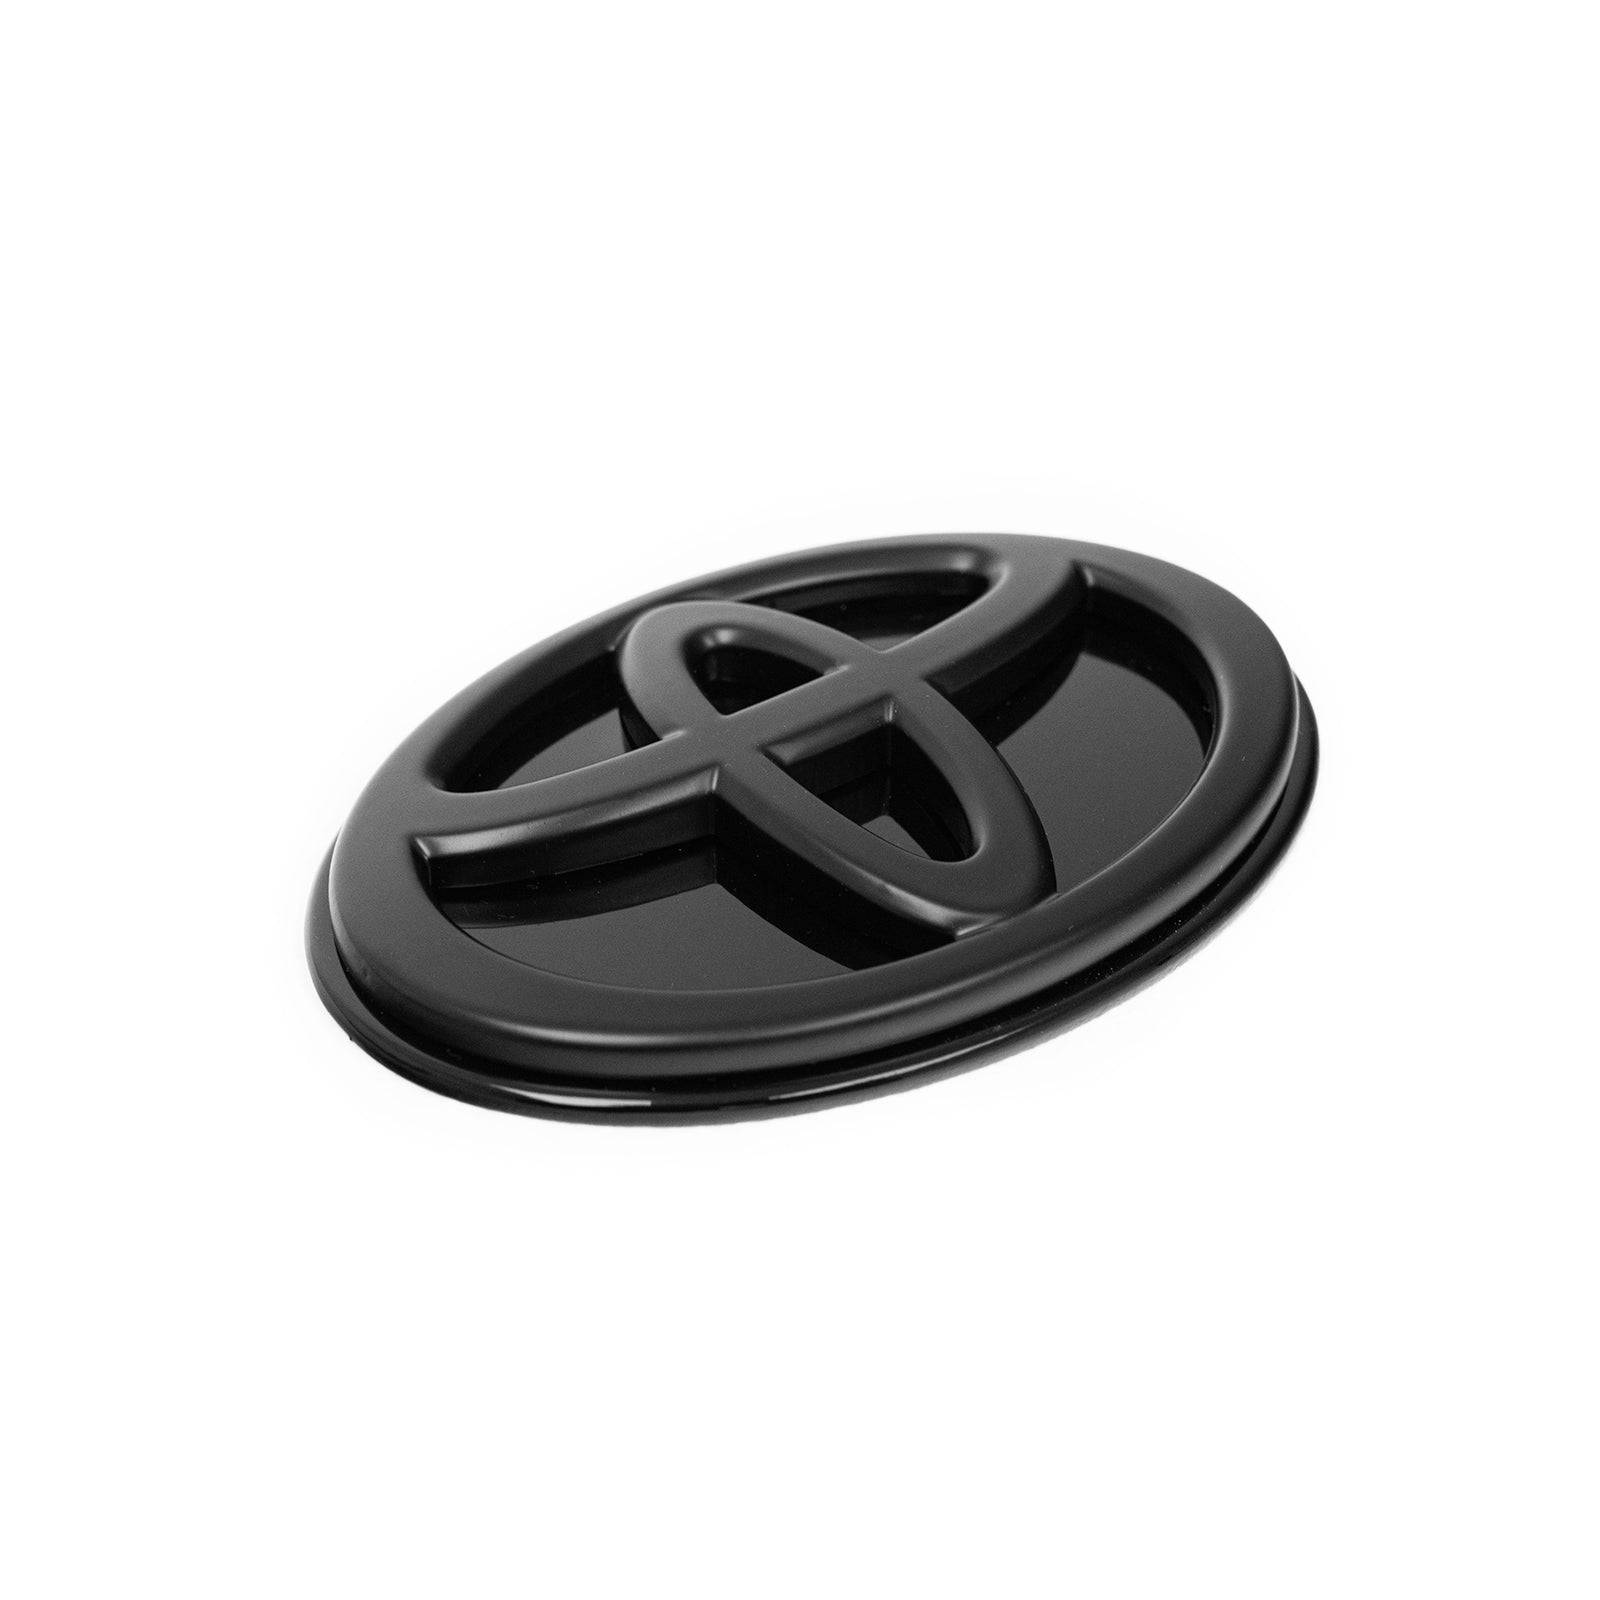 Toyota Supra A90 Mk5 Front & Rear ID-23 Emblem Badges in Satin / Gloss Black (2019+, J29), Model Badges, Essentials - AUTOID | Premium Automotive Accessories